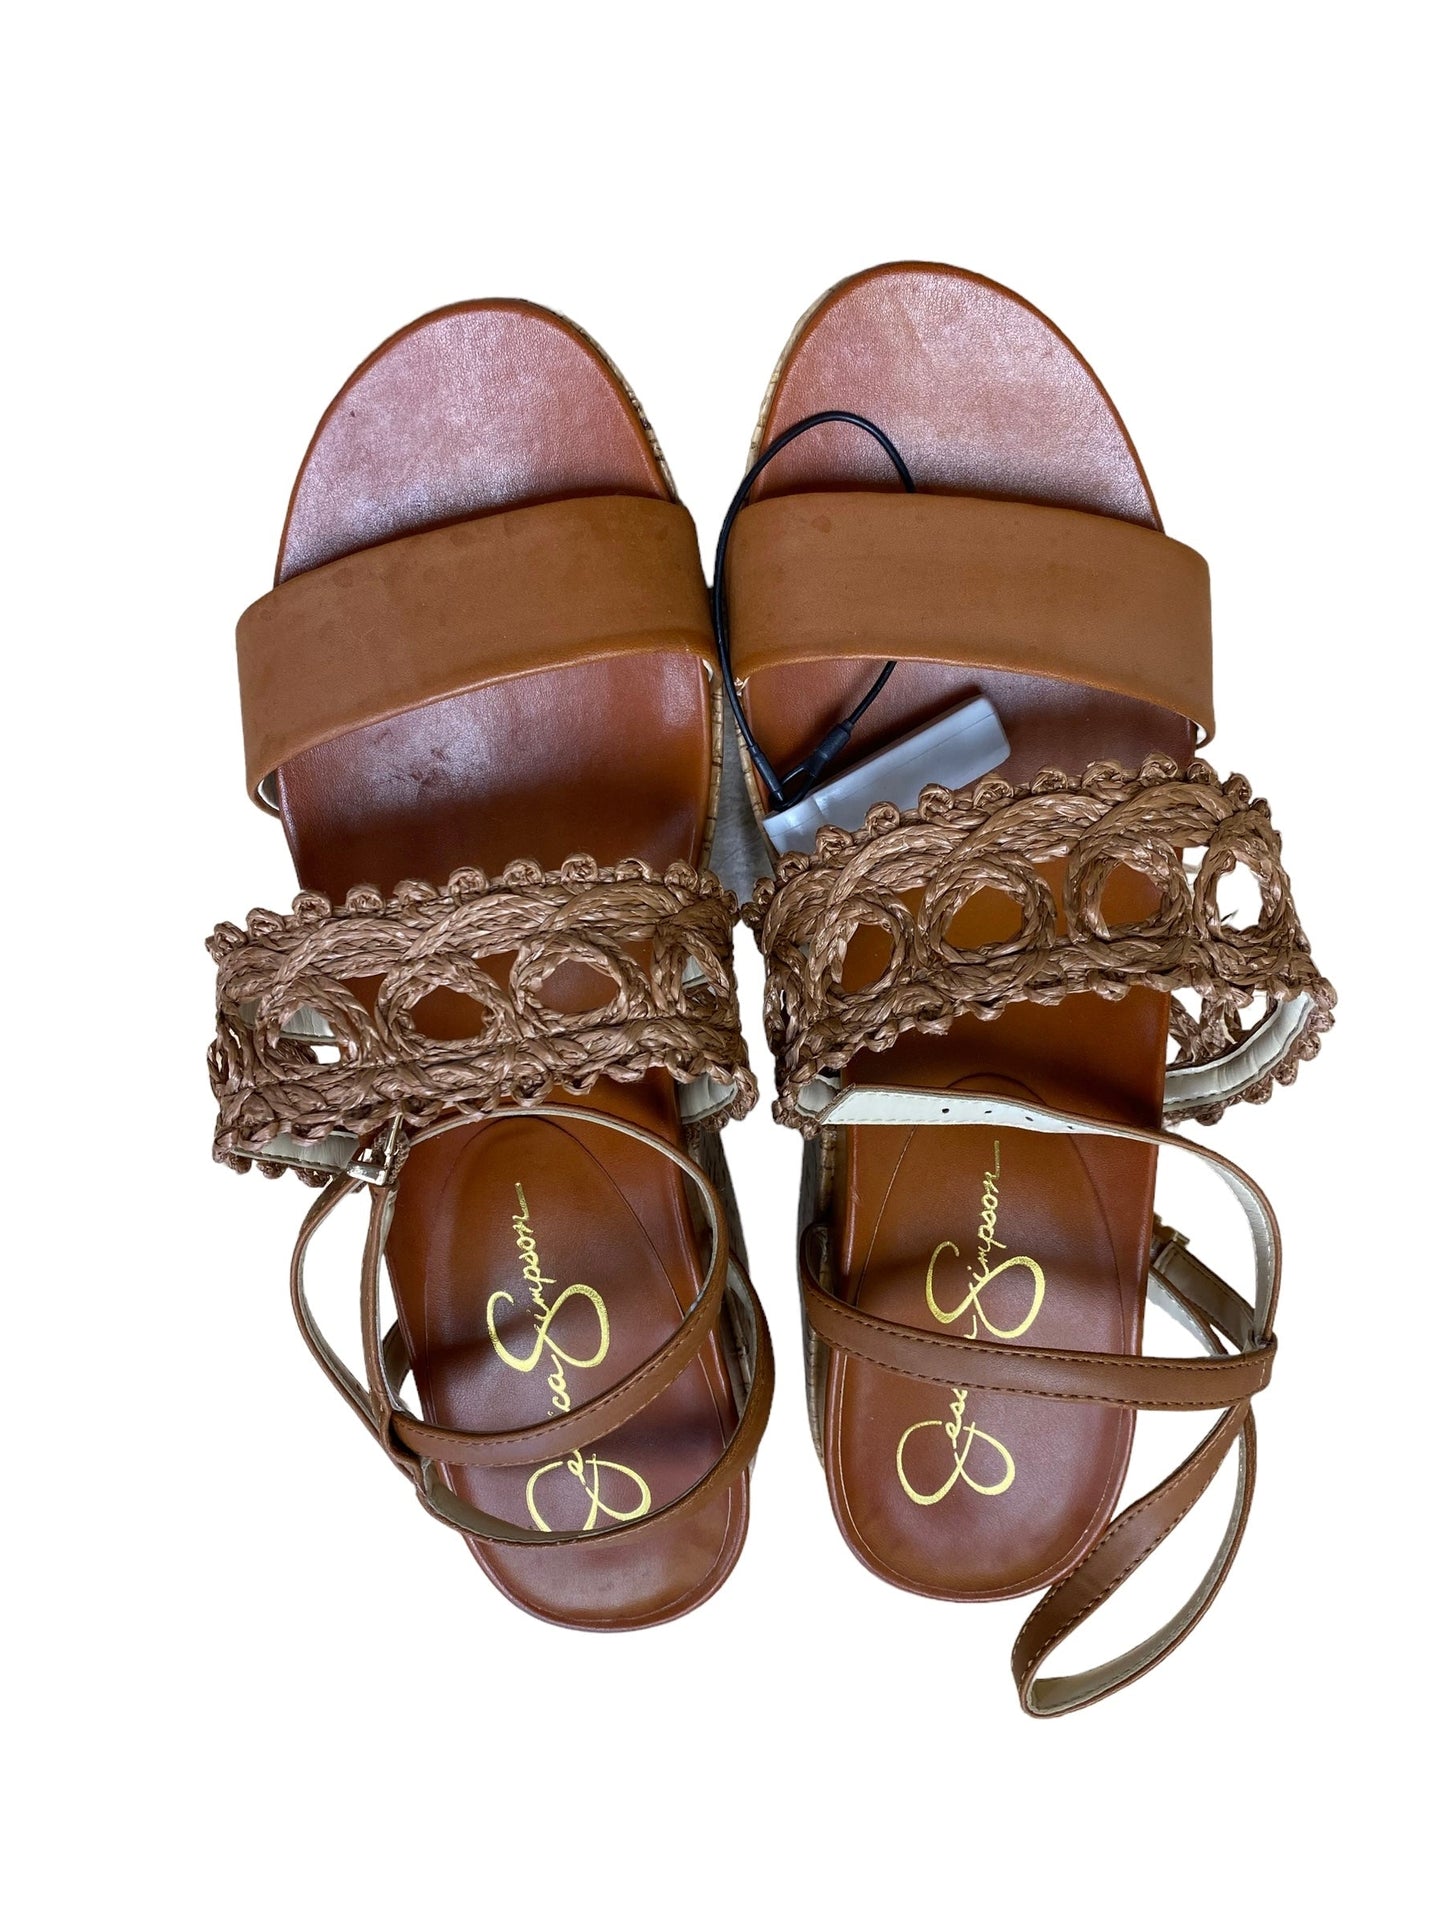 Sandals Heels Platform By Jessica Simpson  Size: 11